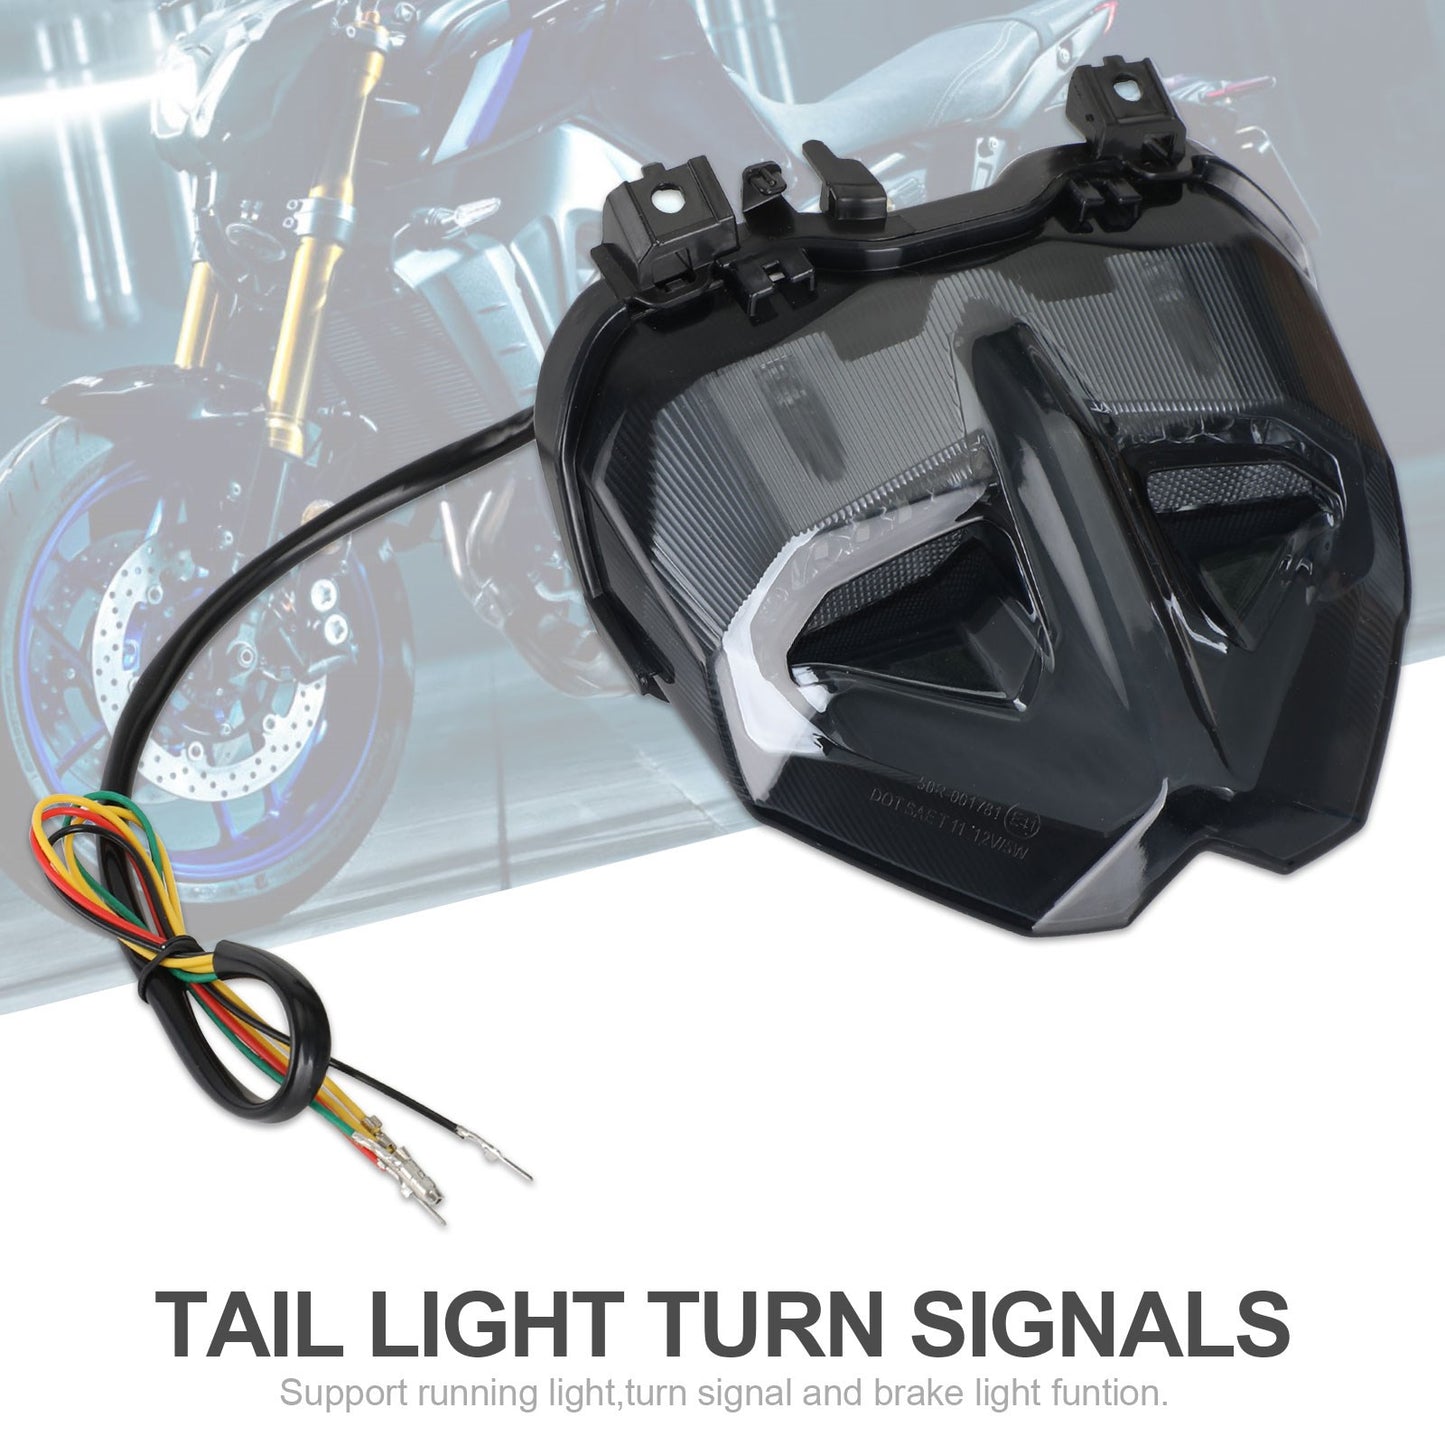 Tail Brake Lights Turn Signal Integrated For YAMAHA MT-09 MT10 SP 2021-2022 Black